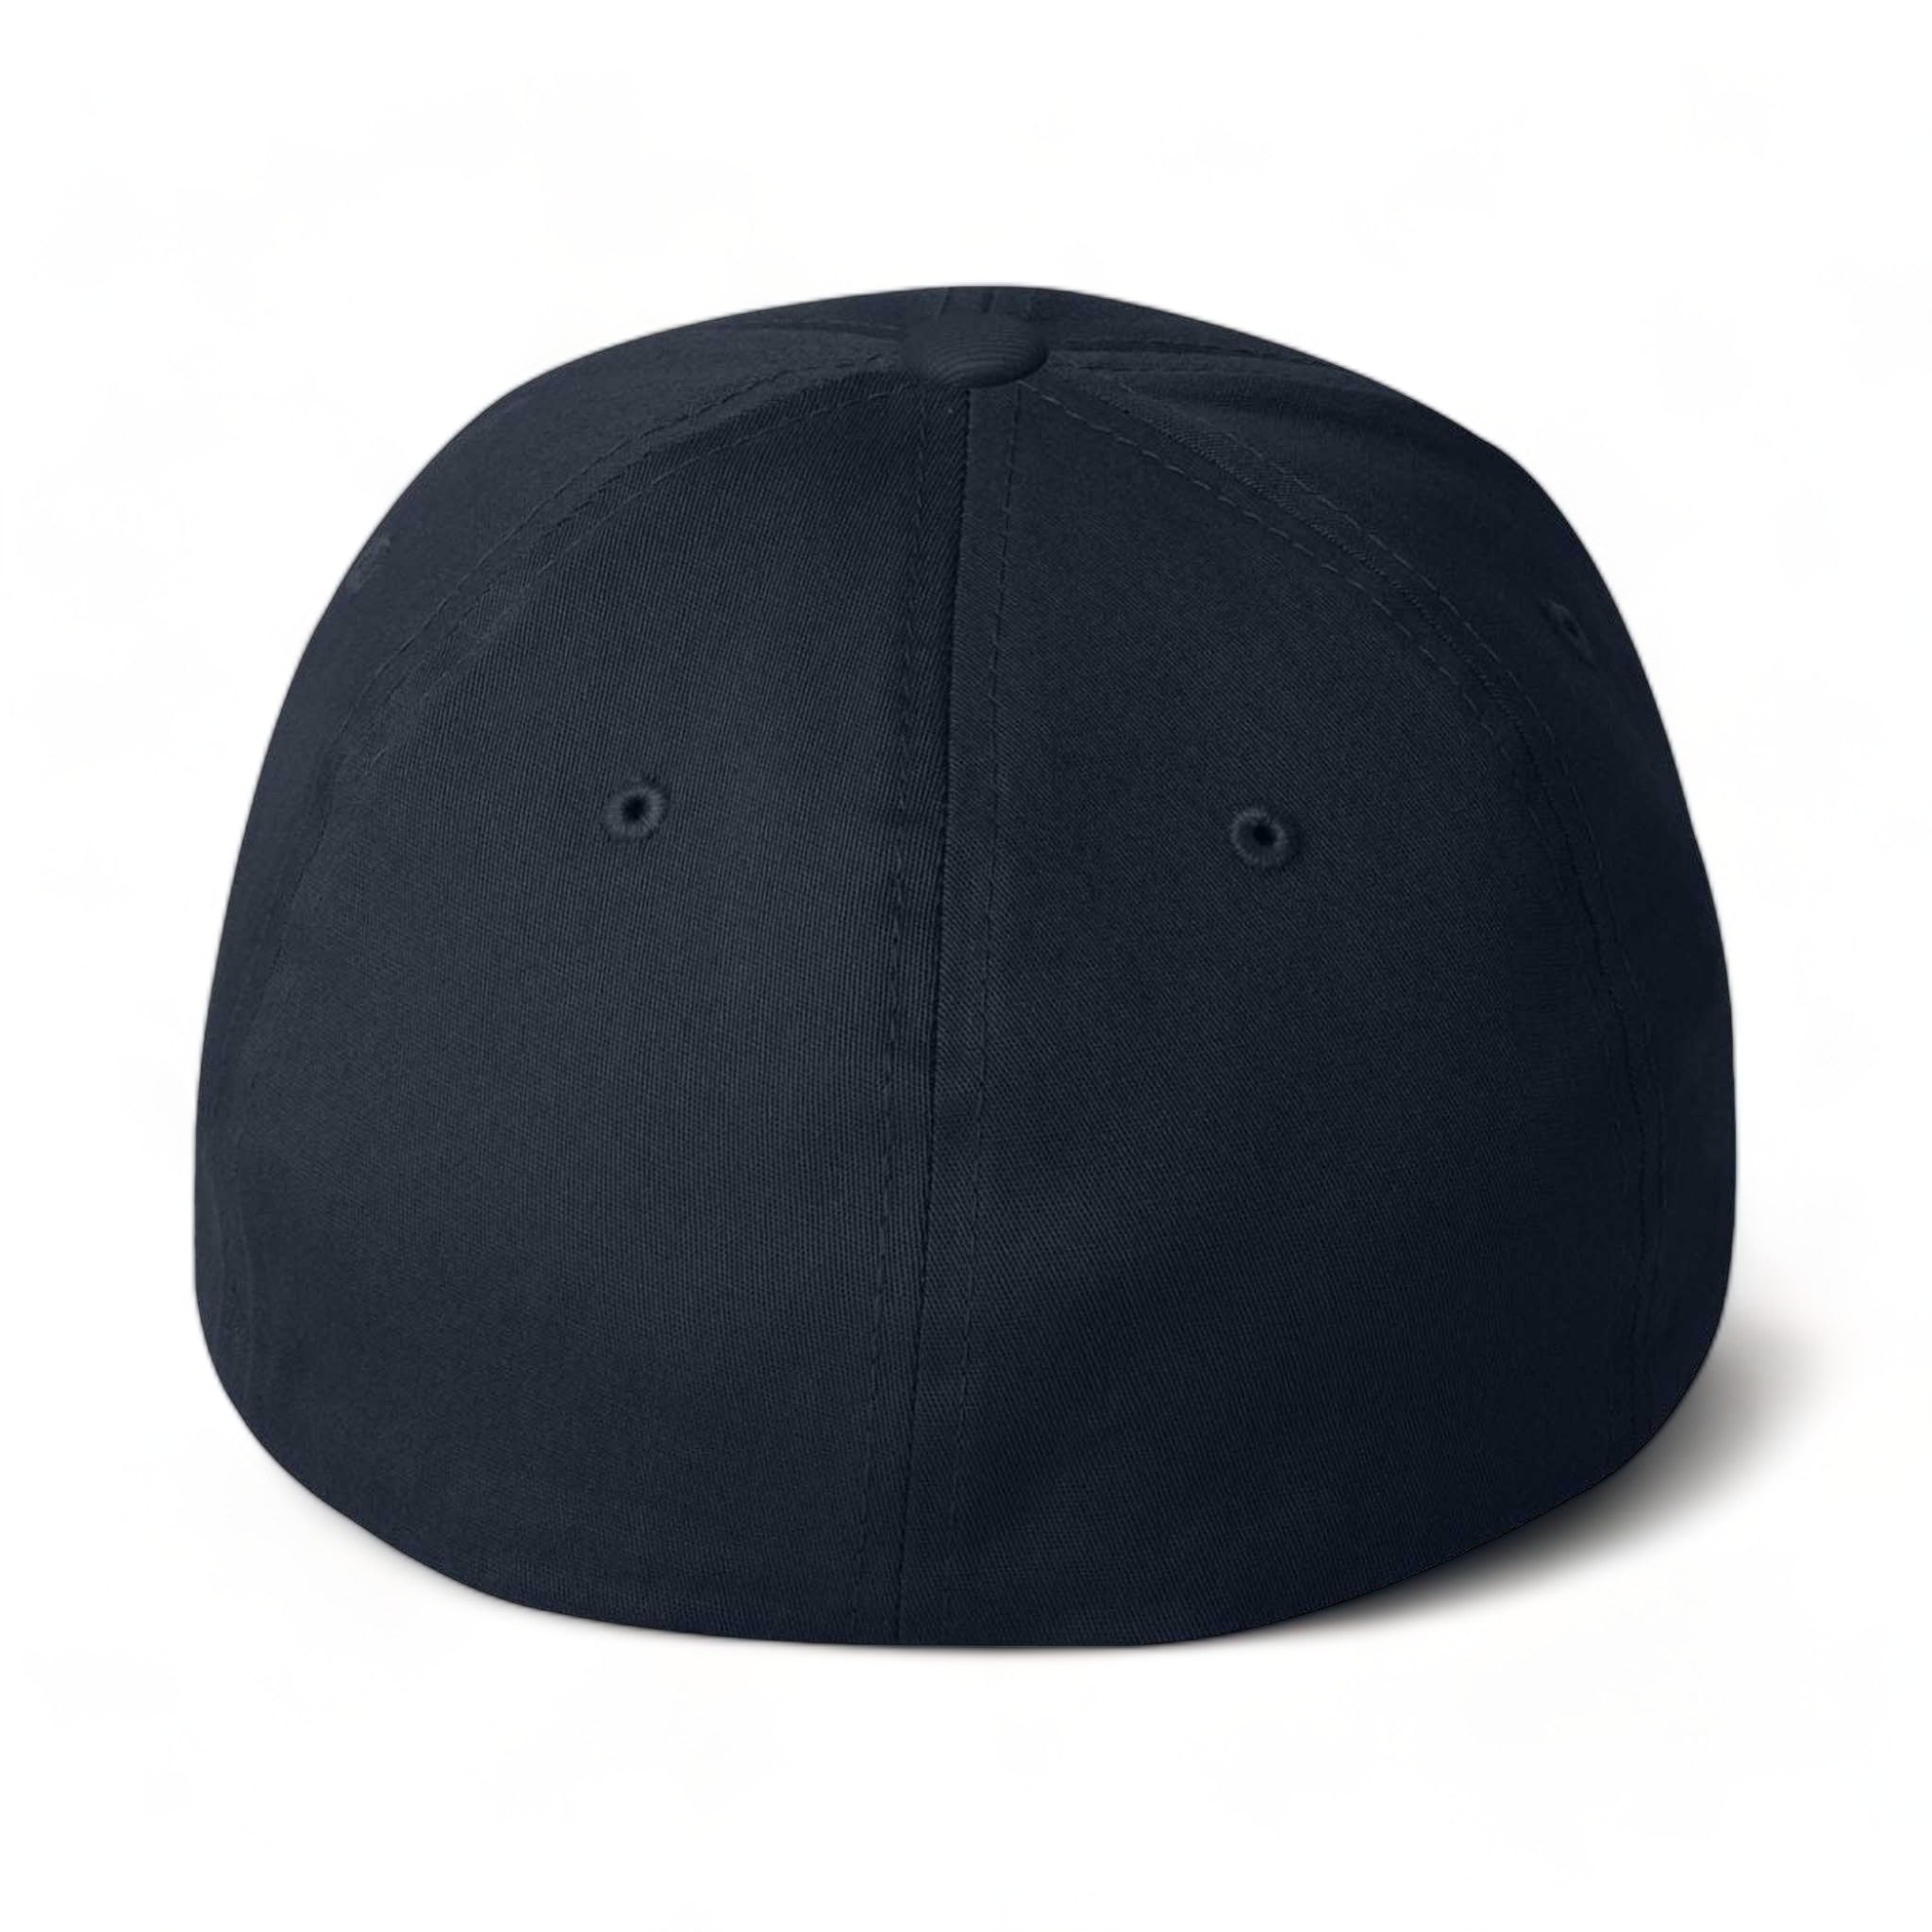 Back view of Flexfit 5001 custom hat in navy